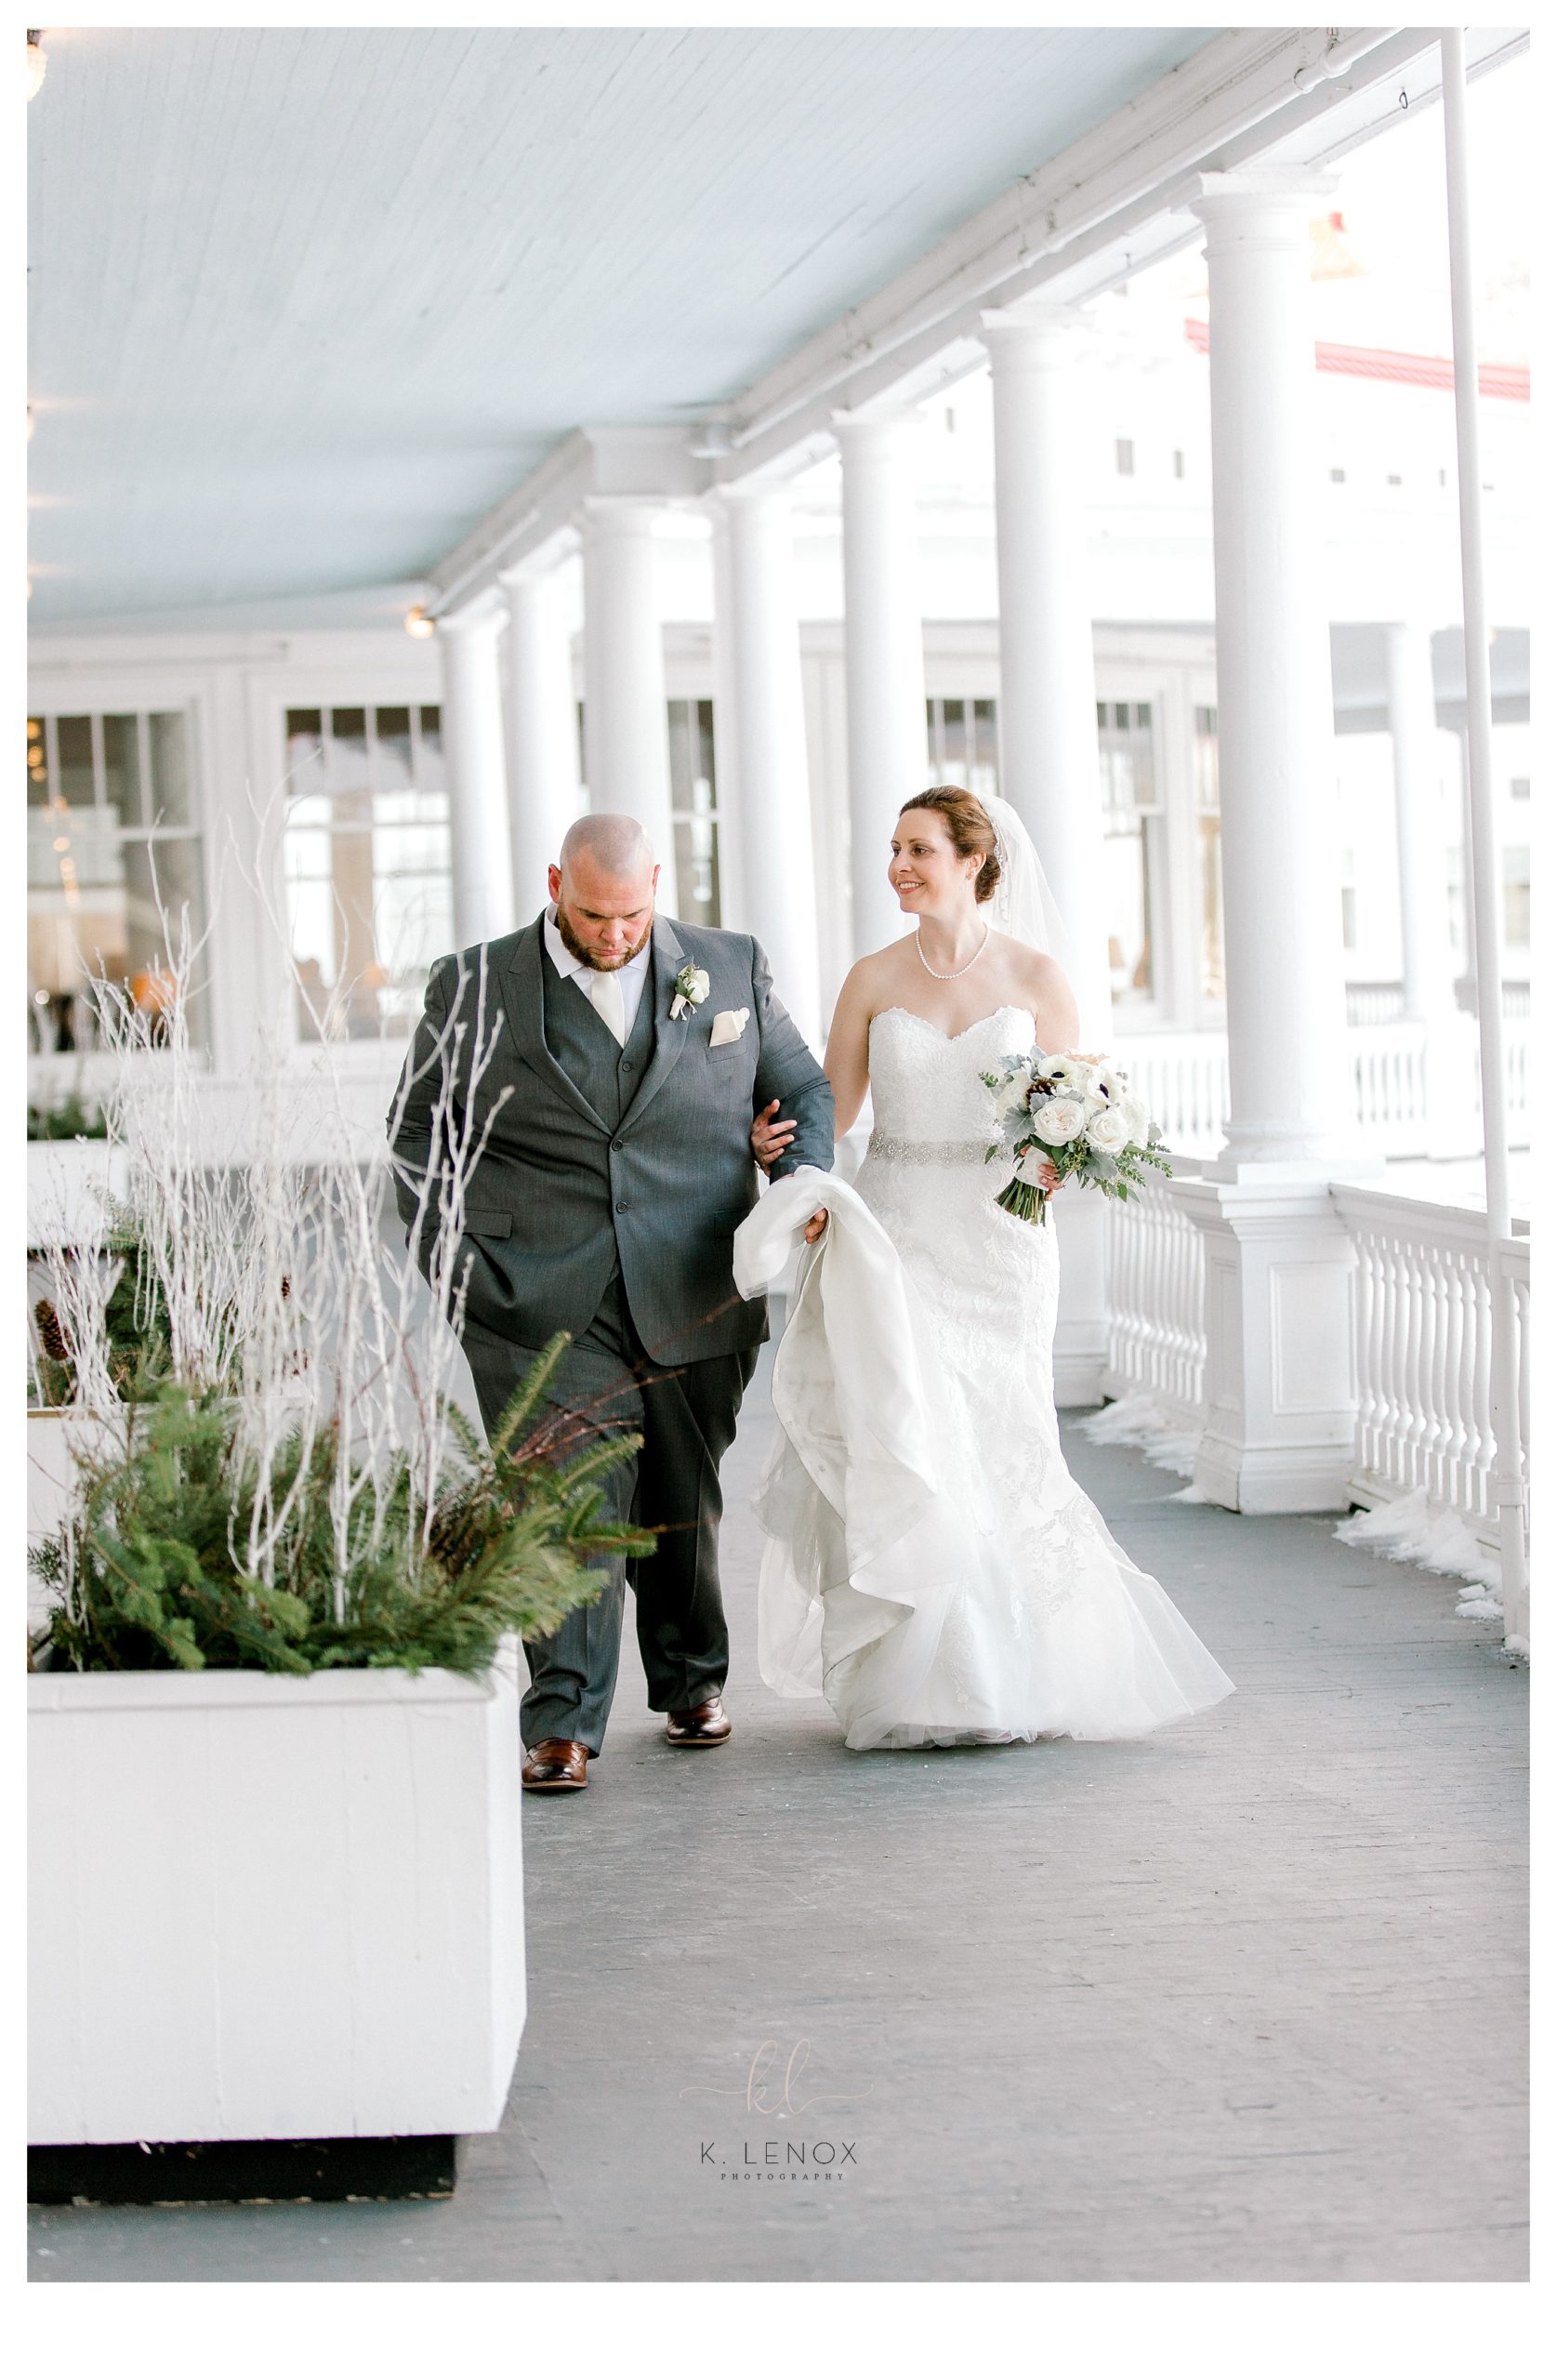 Omni mount washington resort wedding showing bride and groom walking on the veranda